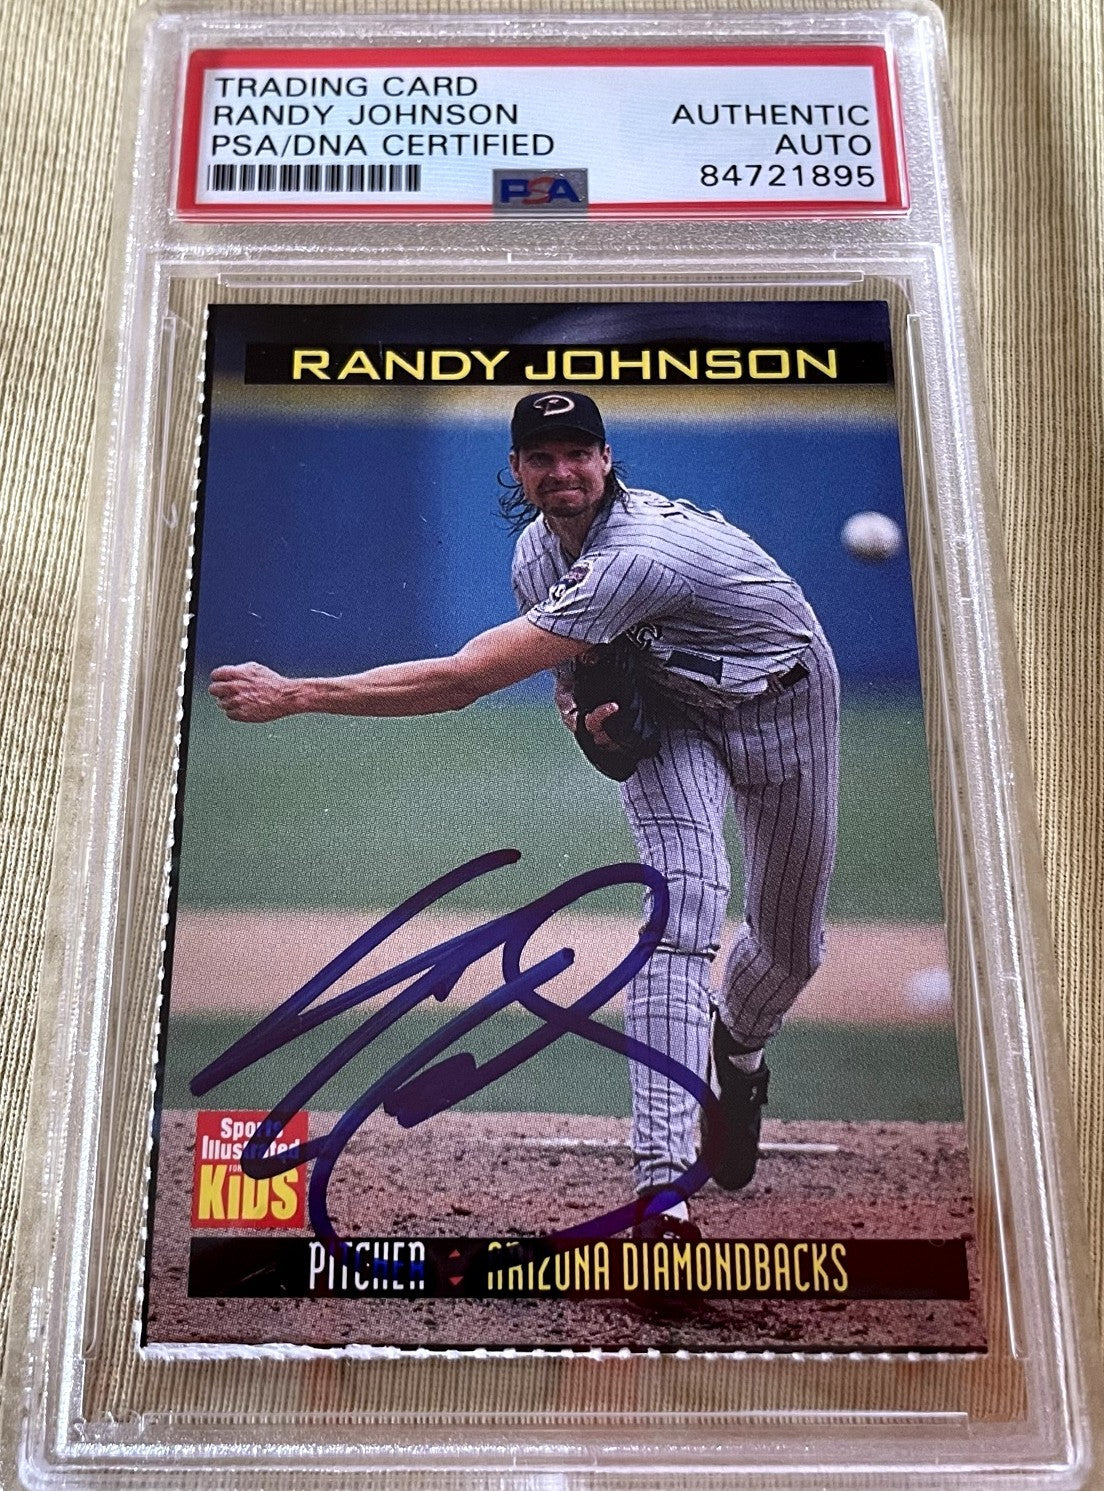 Randy Johnson autographed Arizona Diamondbacks 1999 Sports Illustrated for Kids card PSA/DNA slabbed